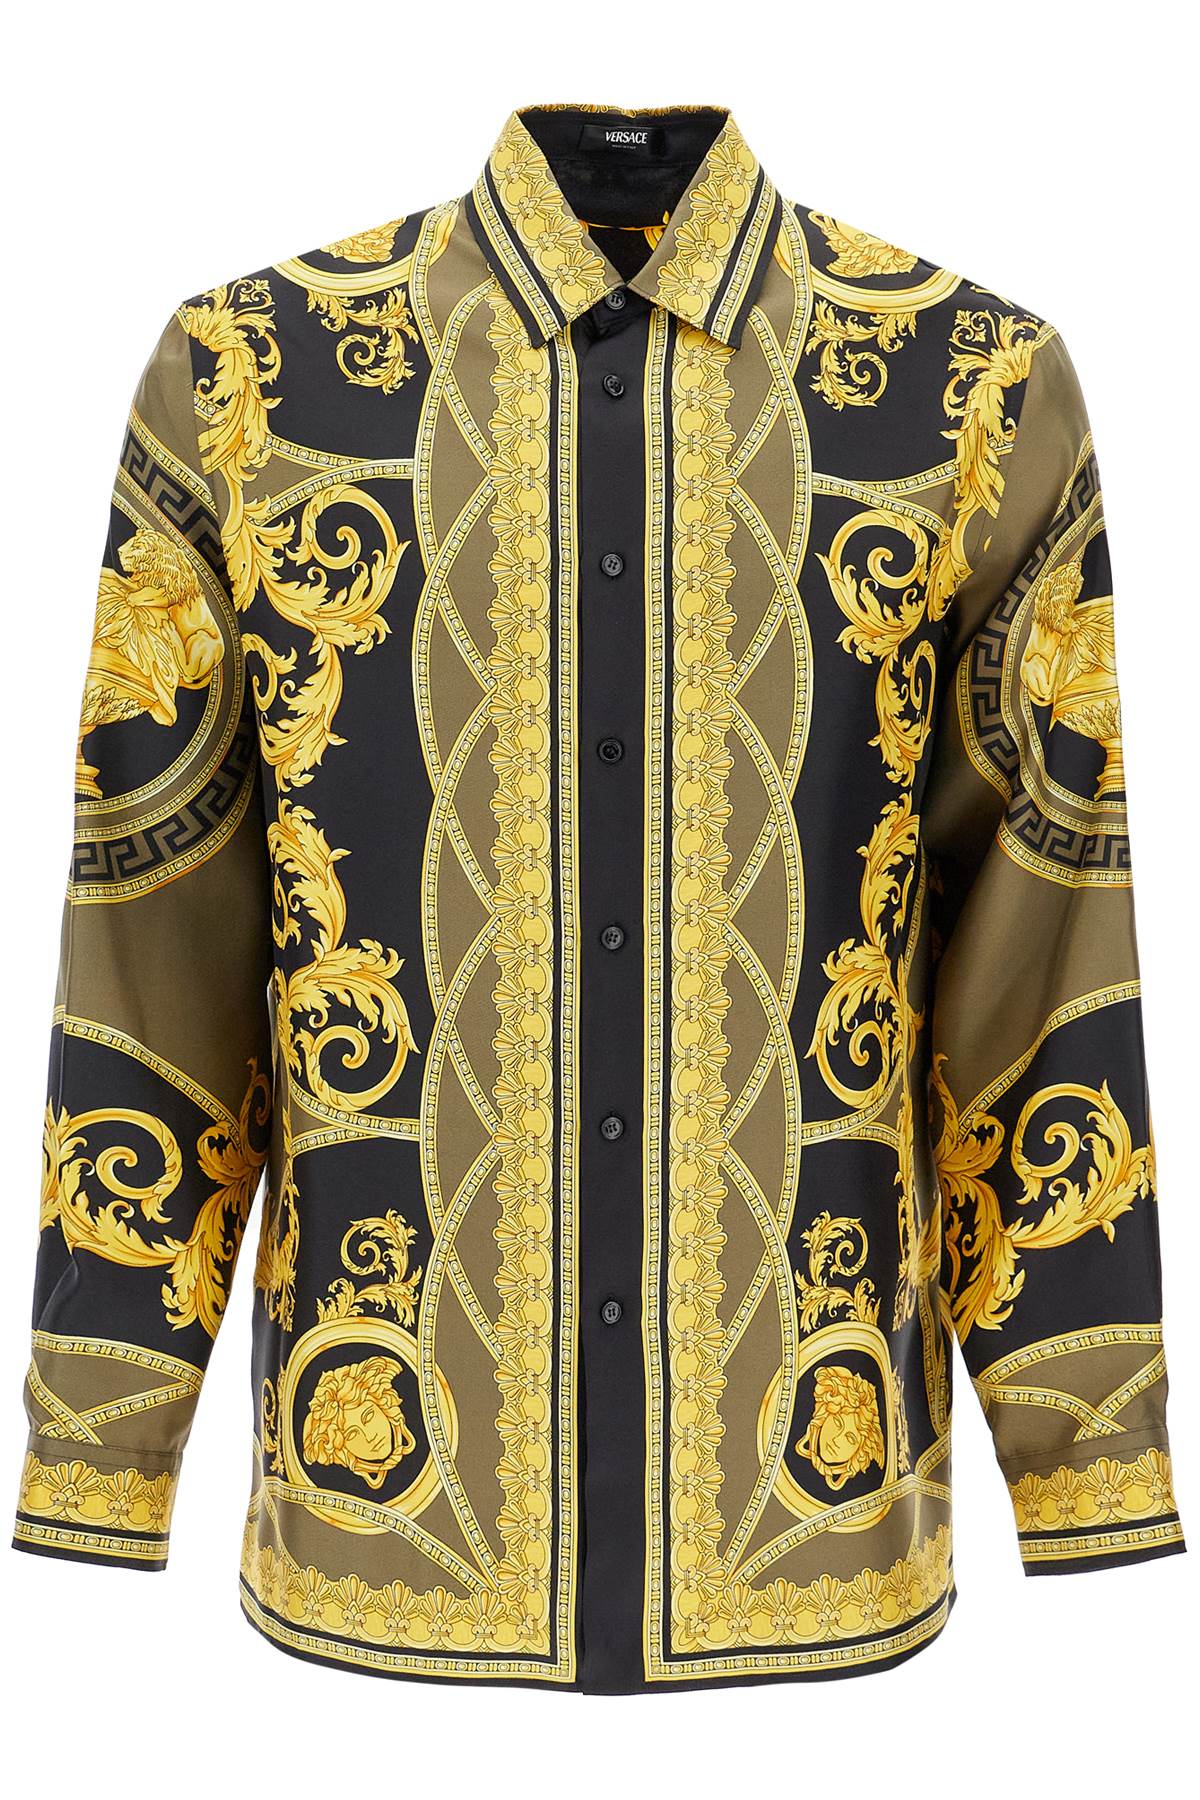 Versace VERSACE barocco silk shirt